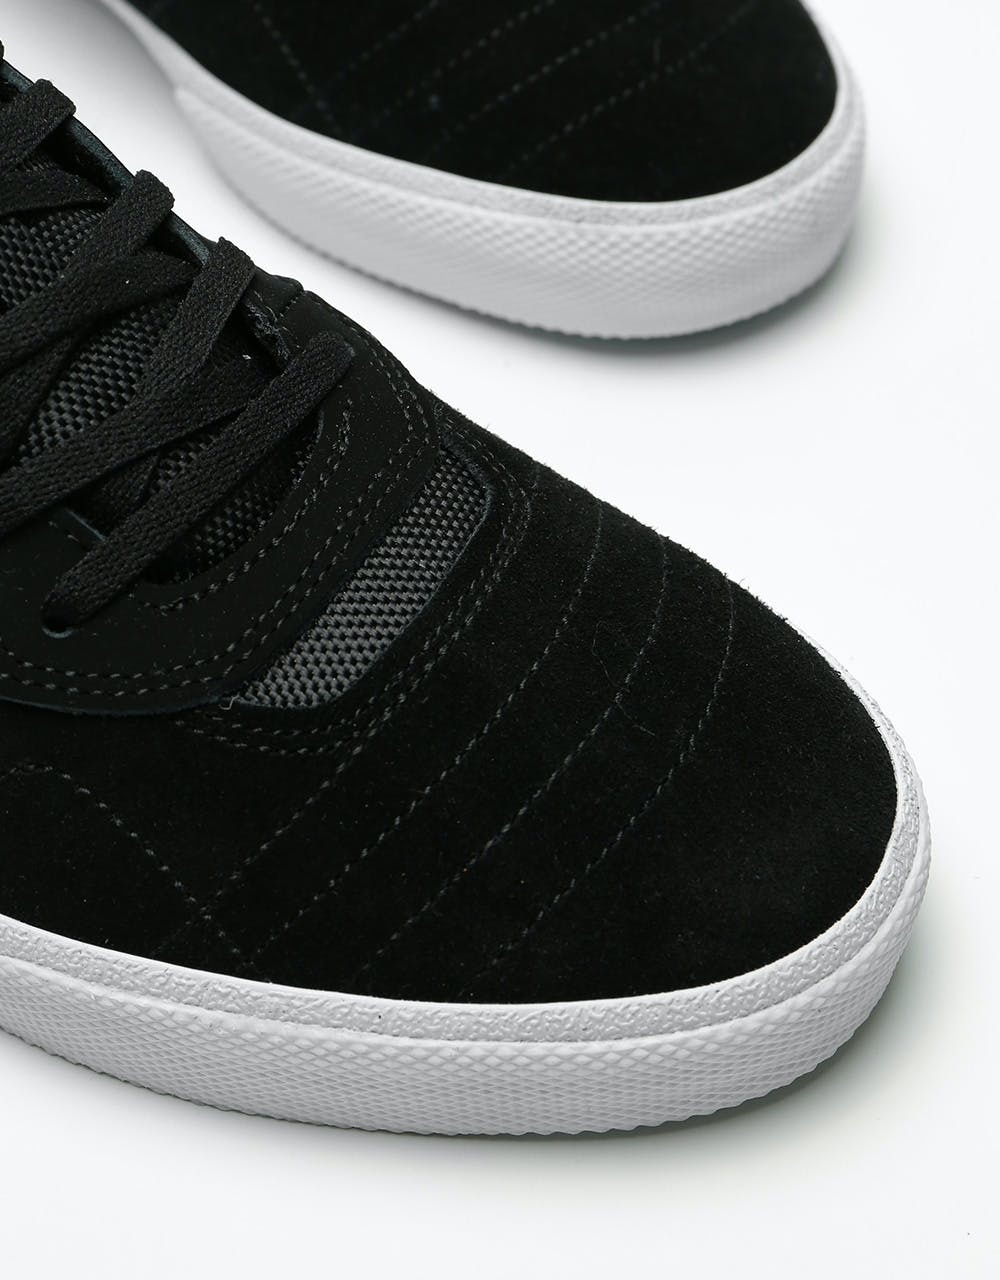 Lakai x EPMD Cambridge Skate Shoes - Black Suede